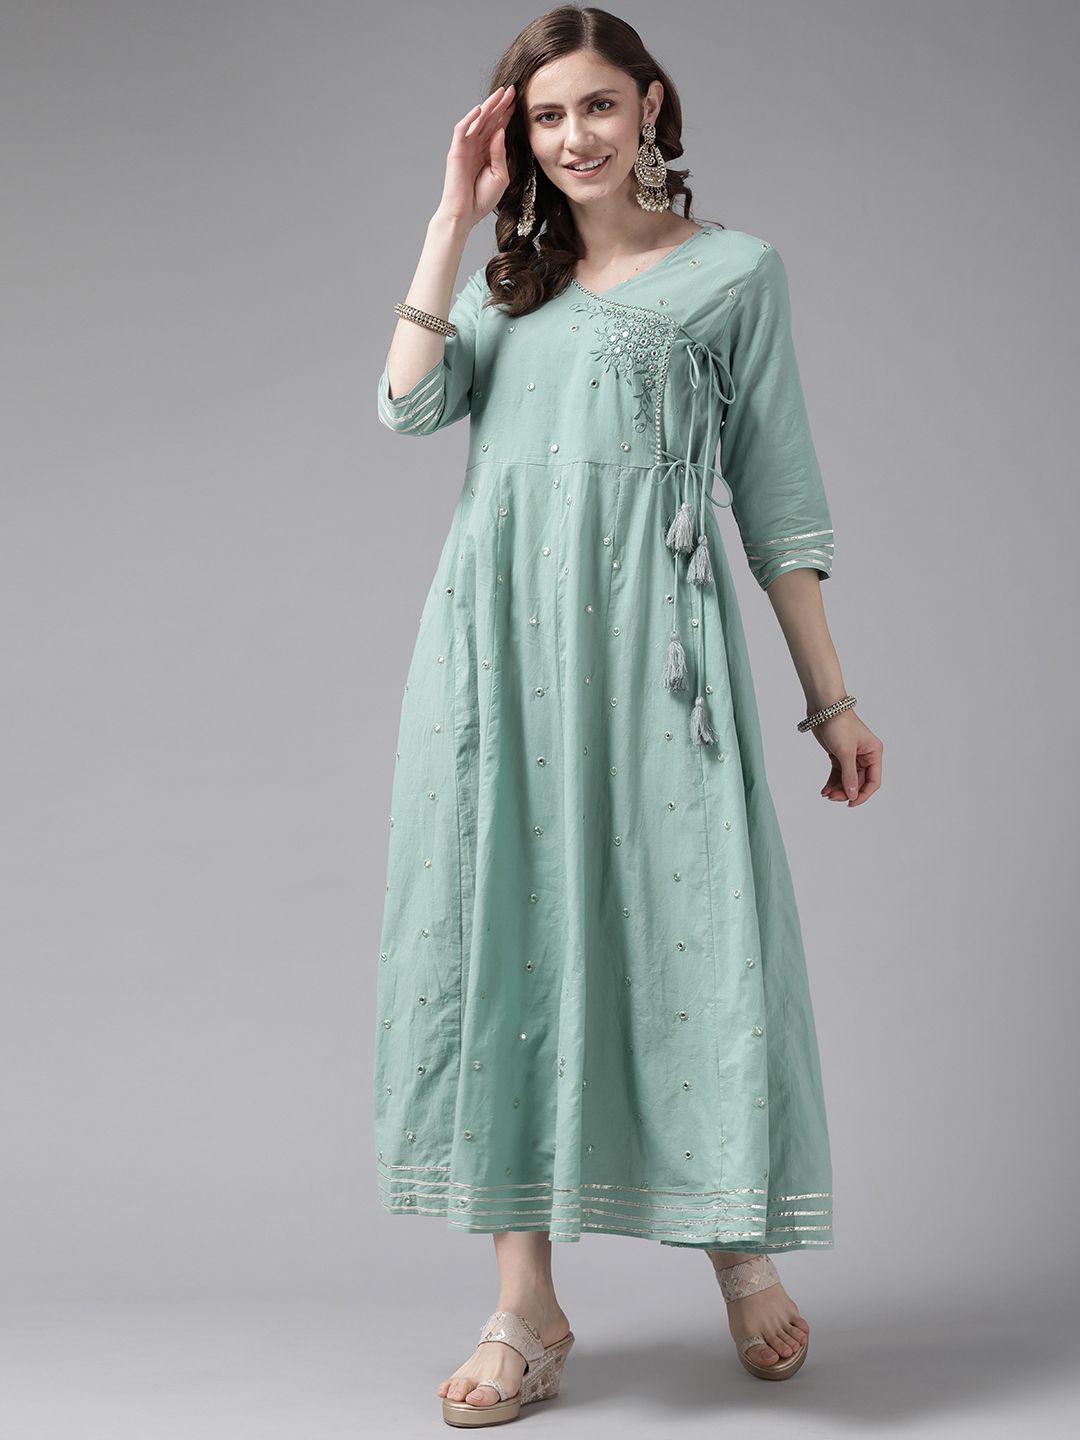 Yufta Sea Green Floral Embroidered Ethnic Maxi Dress Price in India